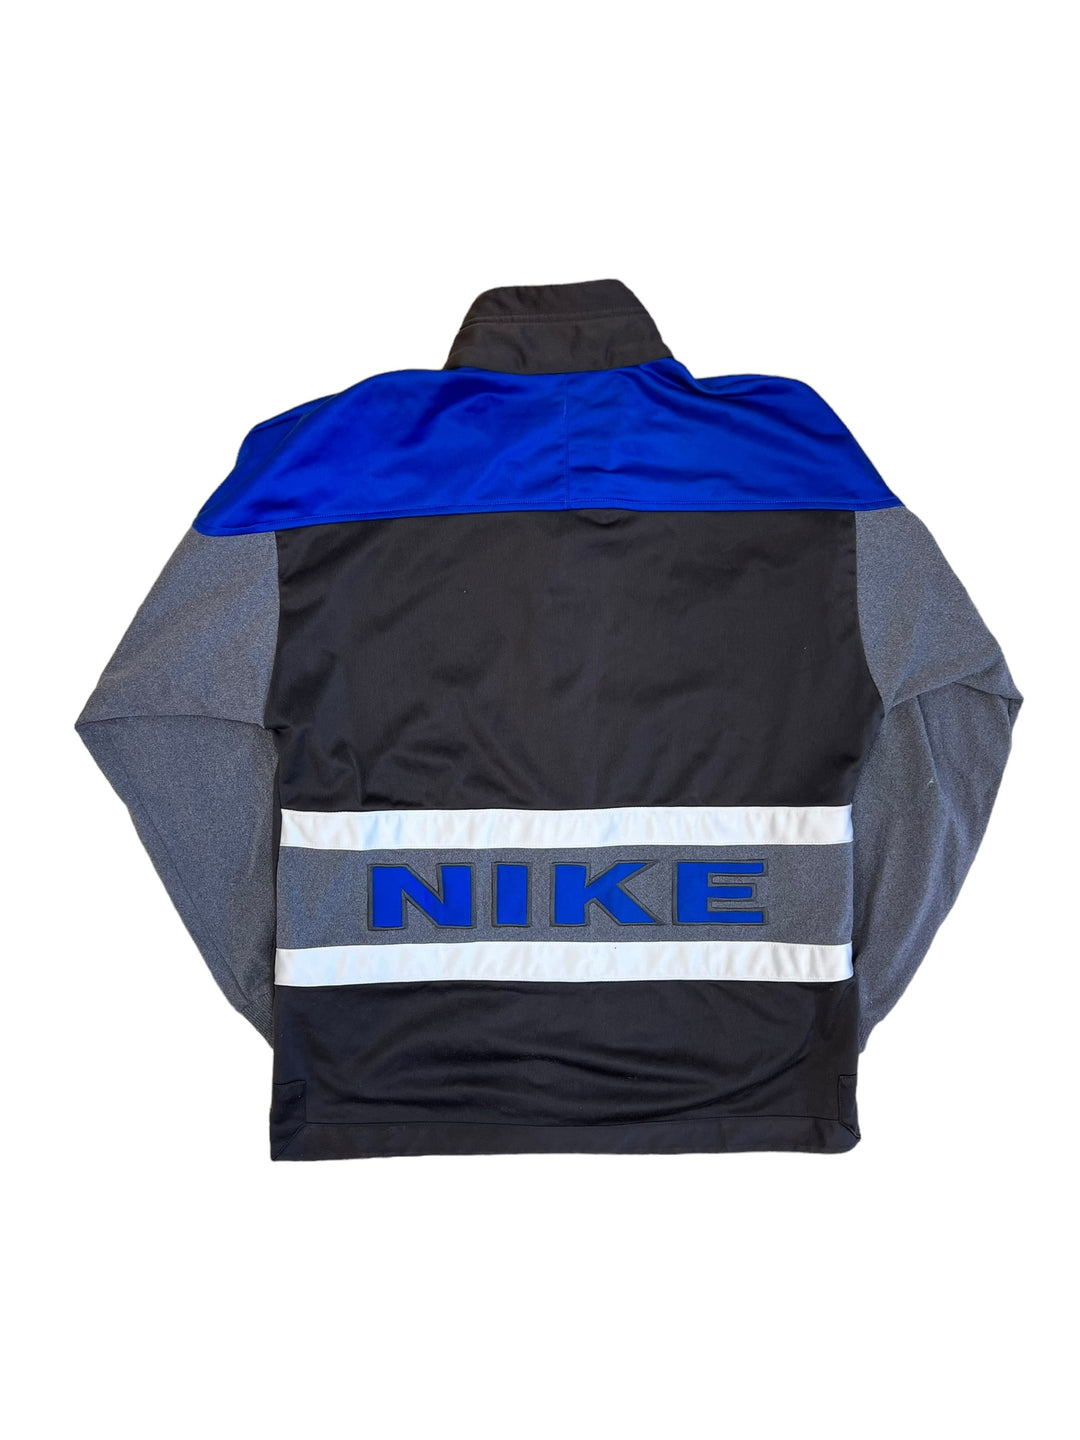 Nike vintage 90’s Button jacket Men’s oversized small